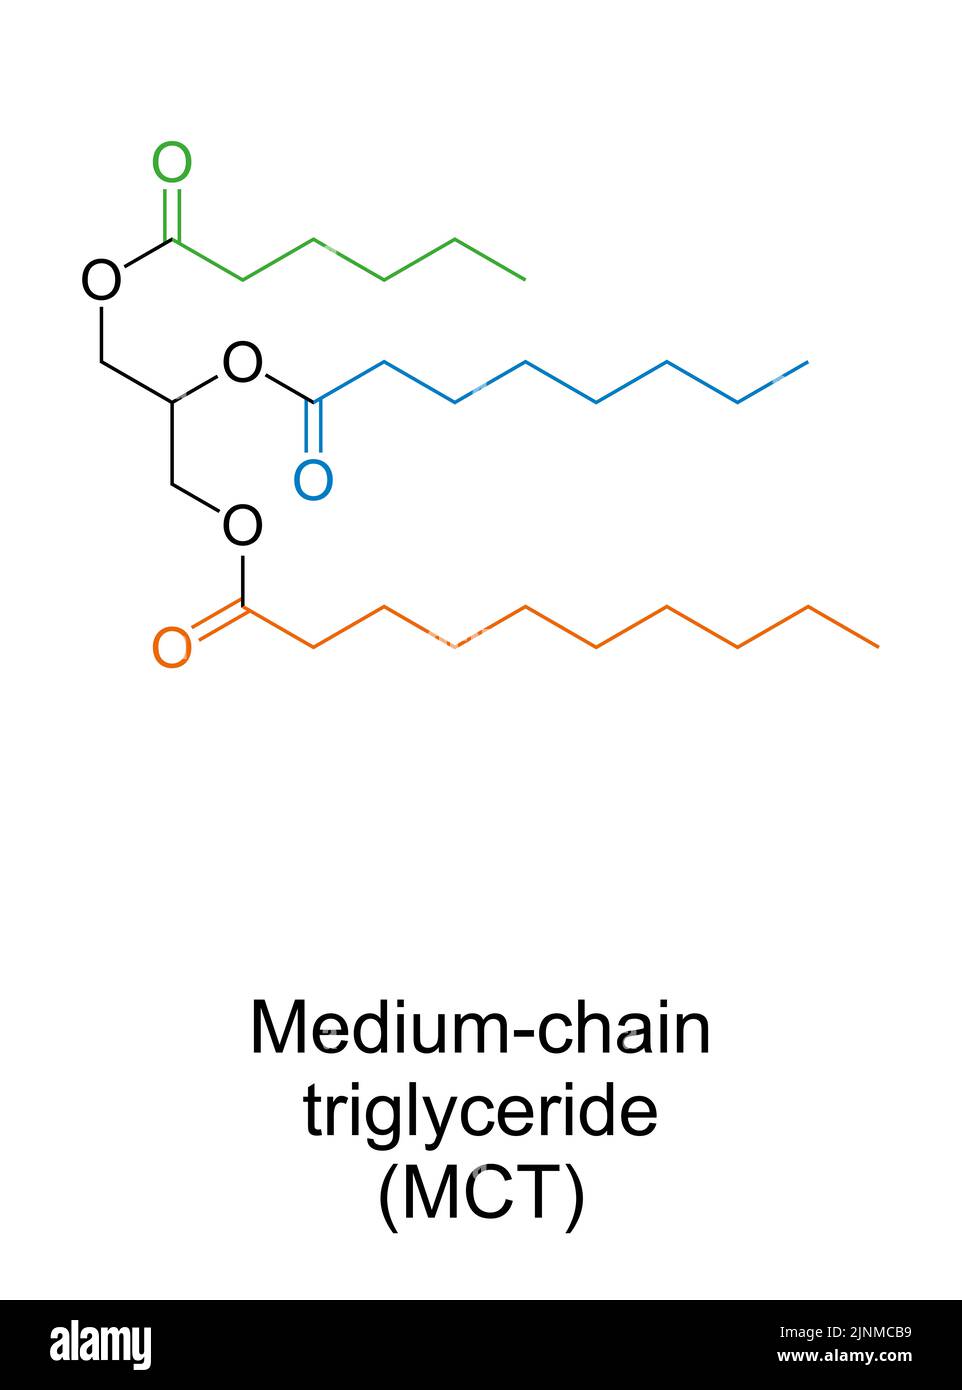 Medium-chain triglyceride, MCT, chemical structure. Example with 3 medium-chain fatty acids. Caproic acid, green, caprylic, blue, capric acid, orange. Stock Photo